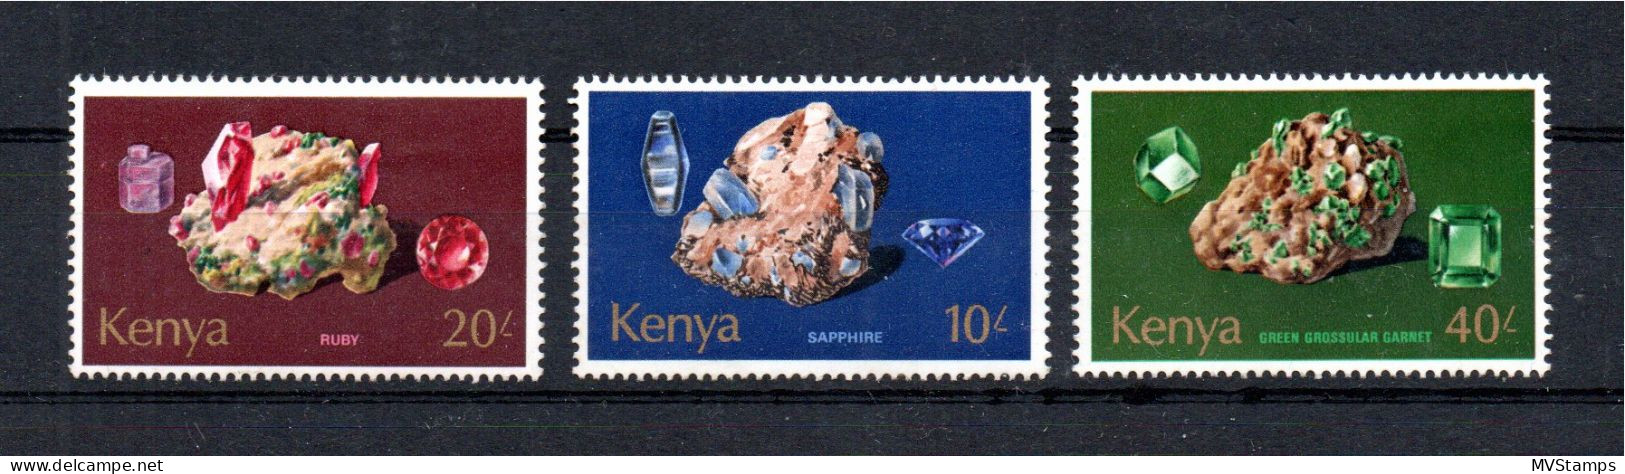 Kenya 1977 Set Minerals/Ruby/Saphire Stamps (Michel 108/10) MNH - Kenya (1963-...)